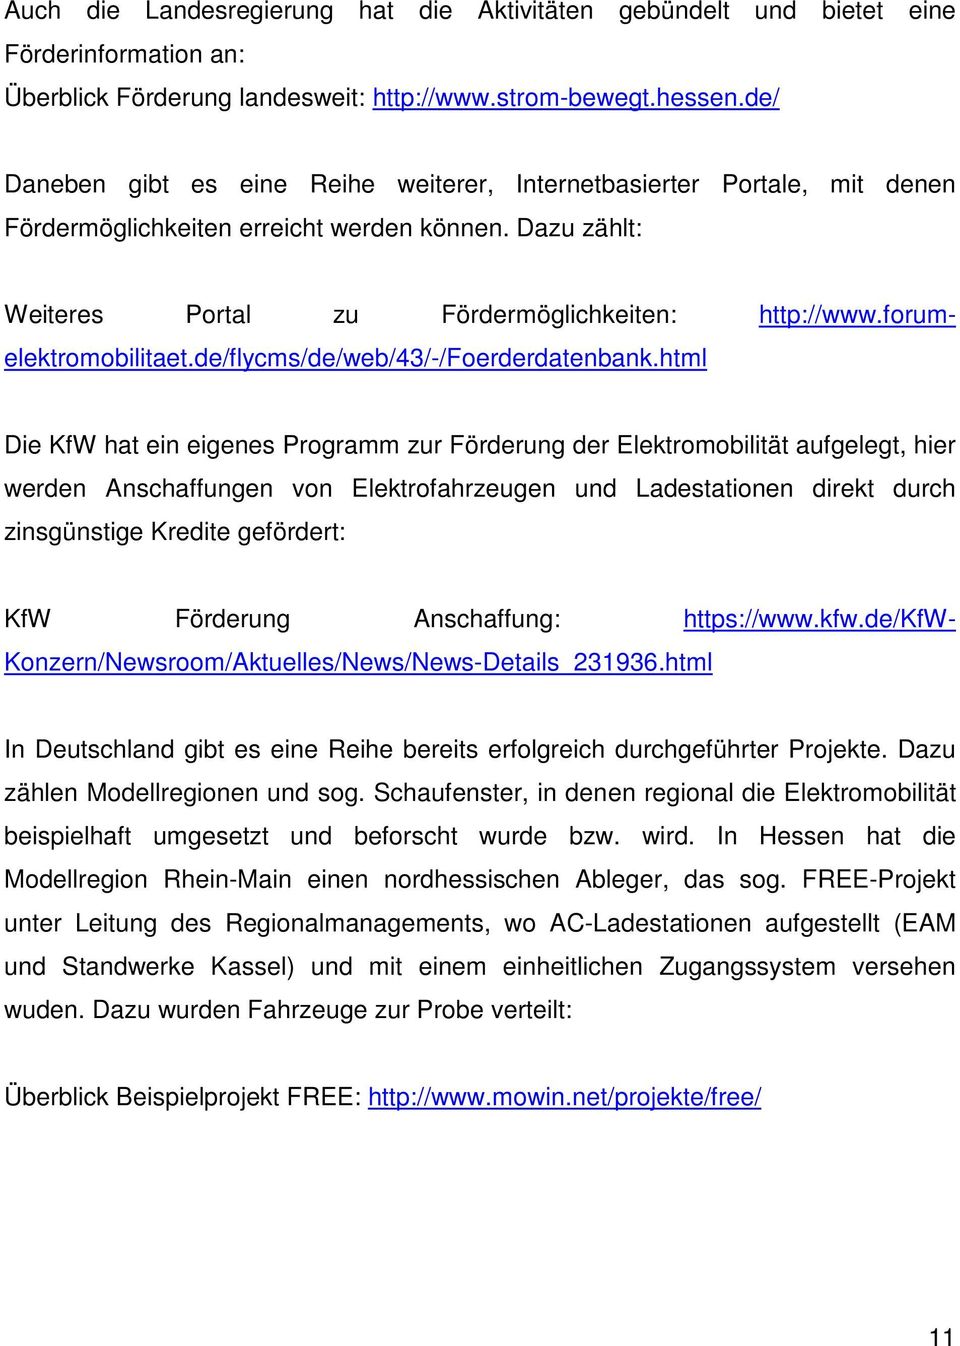 forumelektromobilitaet.de/flycms/de/web/43/-/foerderdatenbank.